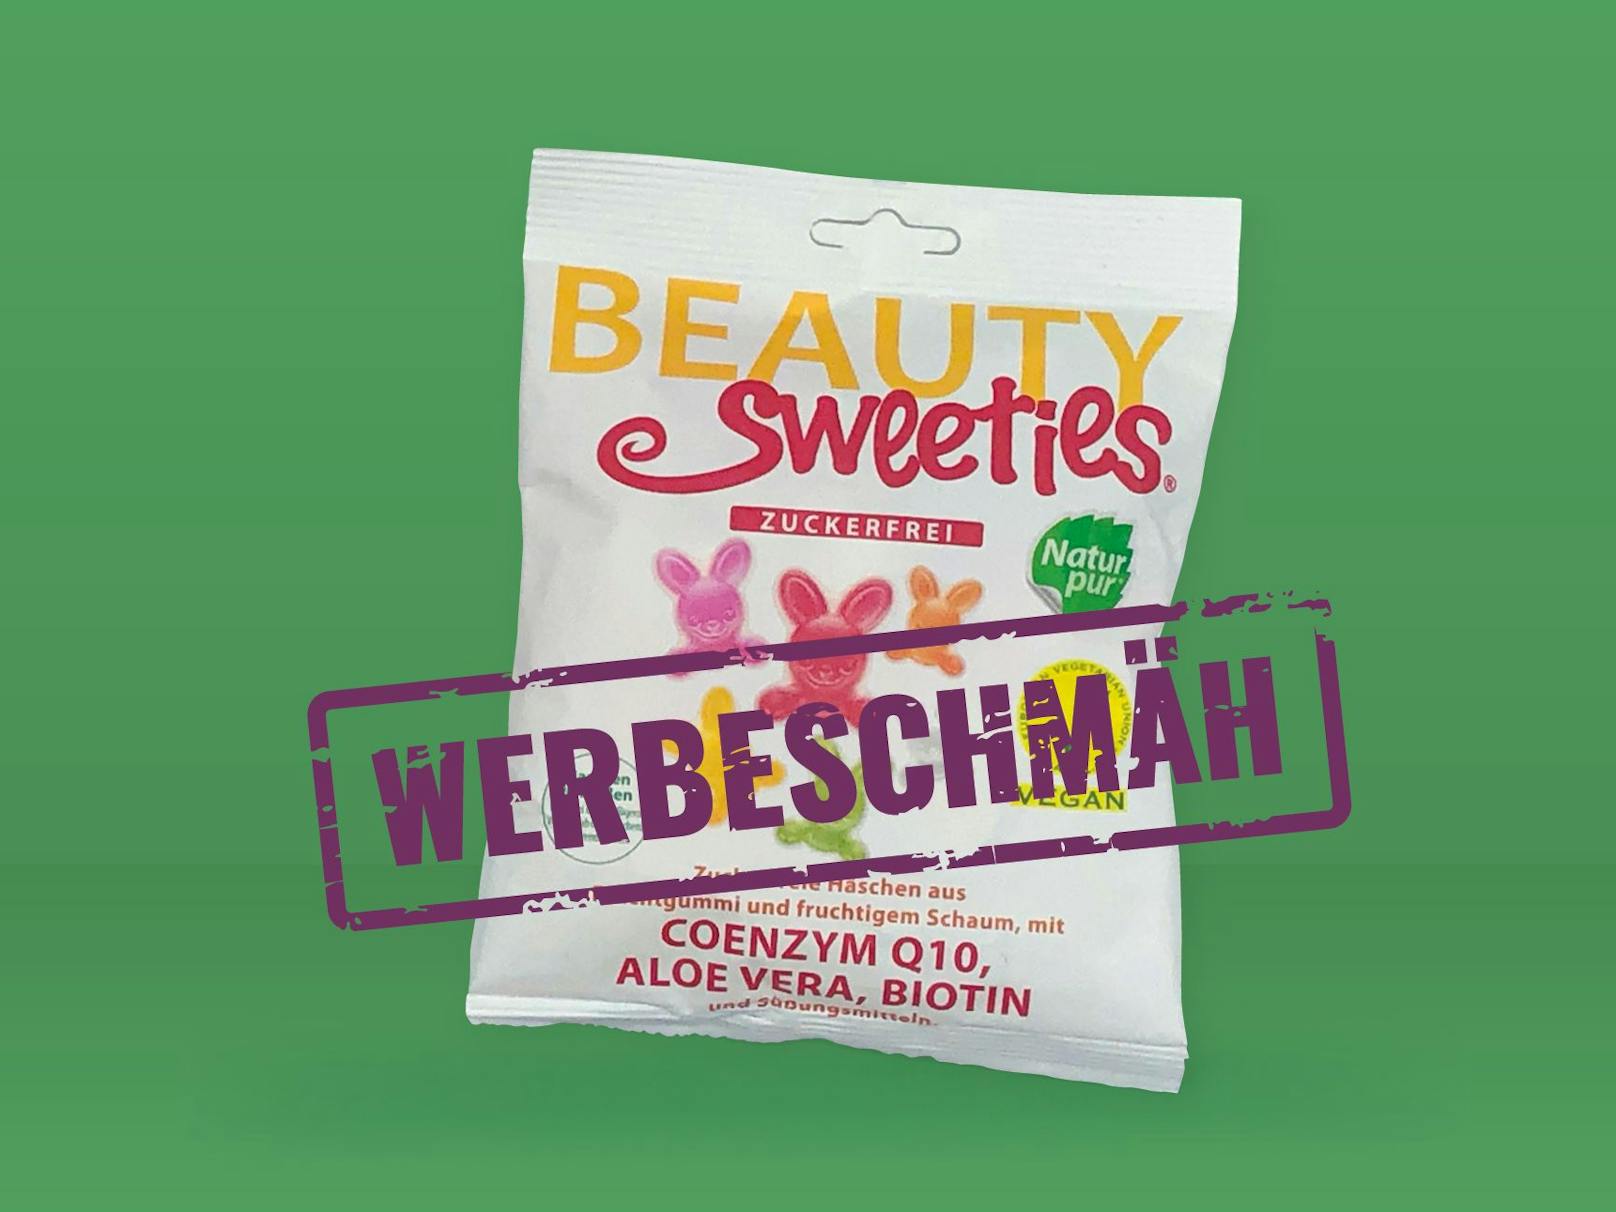 Foodwatch verleiht den&nbsp;Werbeschmäh des Monats Juli an "Beauty Sweeties Zuckerfreie Häschen aus Fruchtgummi".